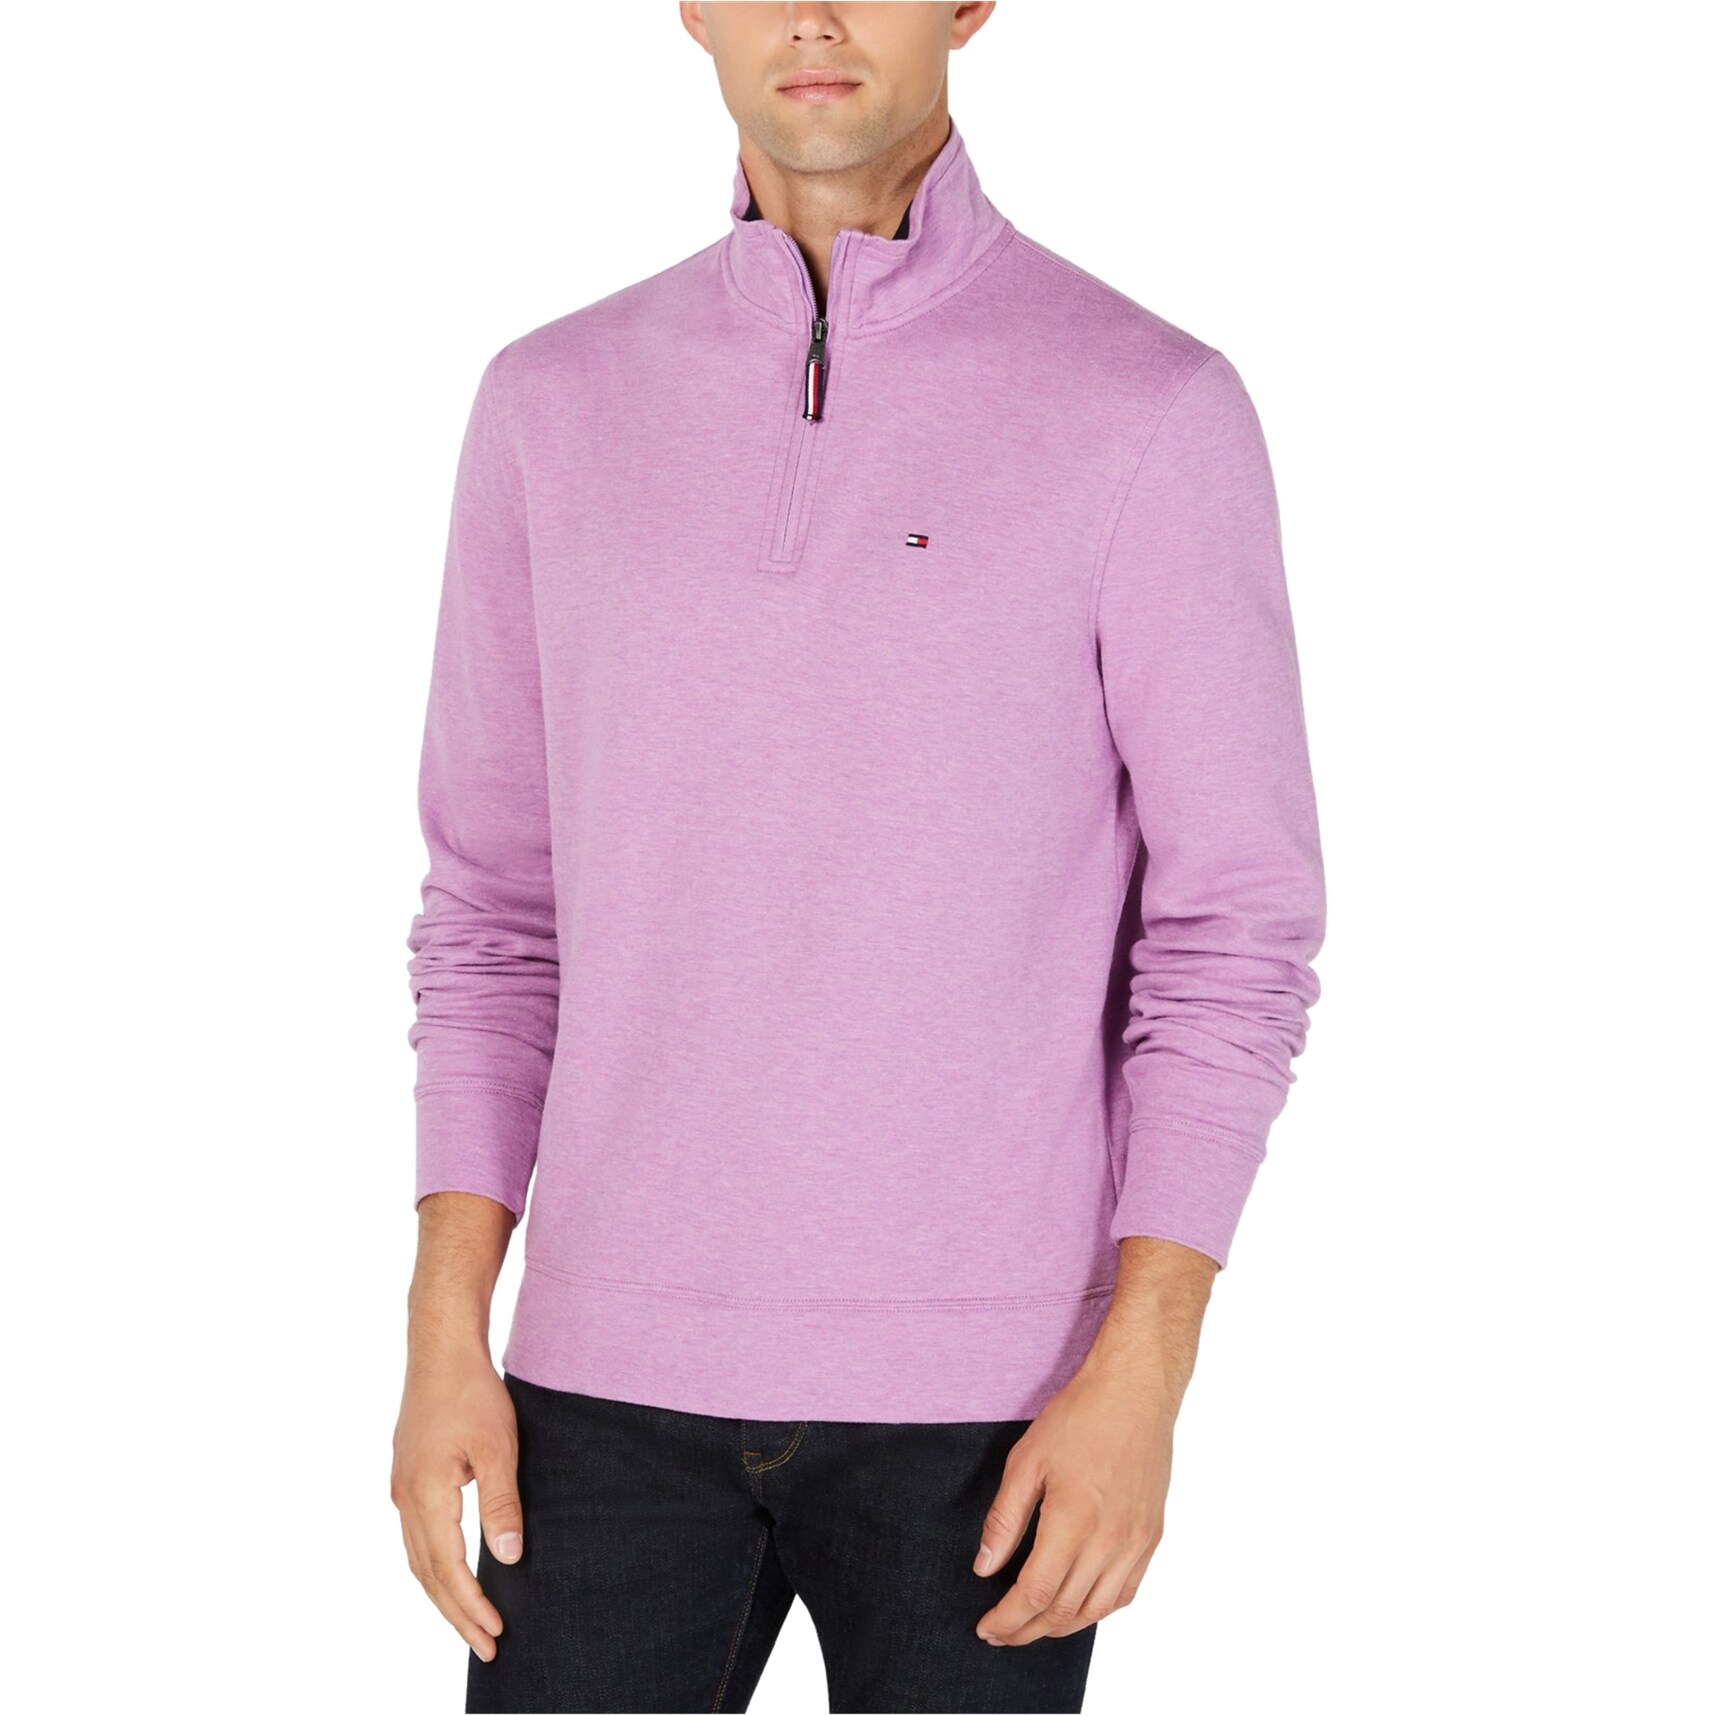 tommy hilfiger purple sweater